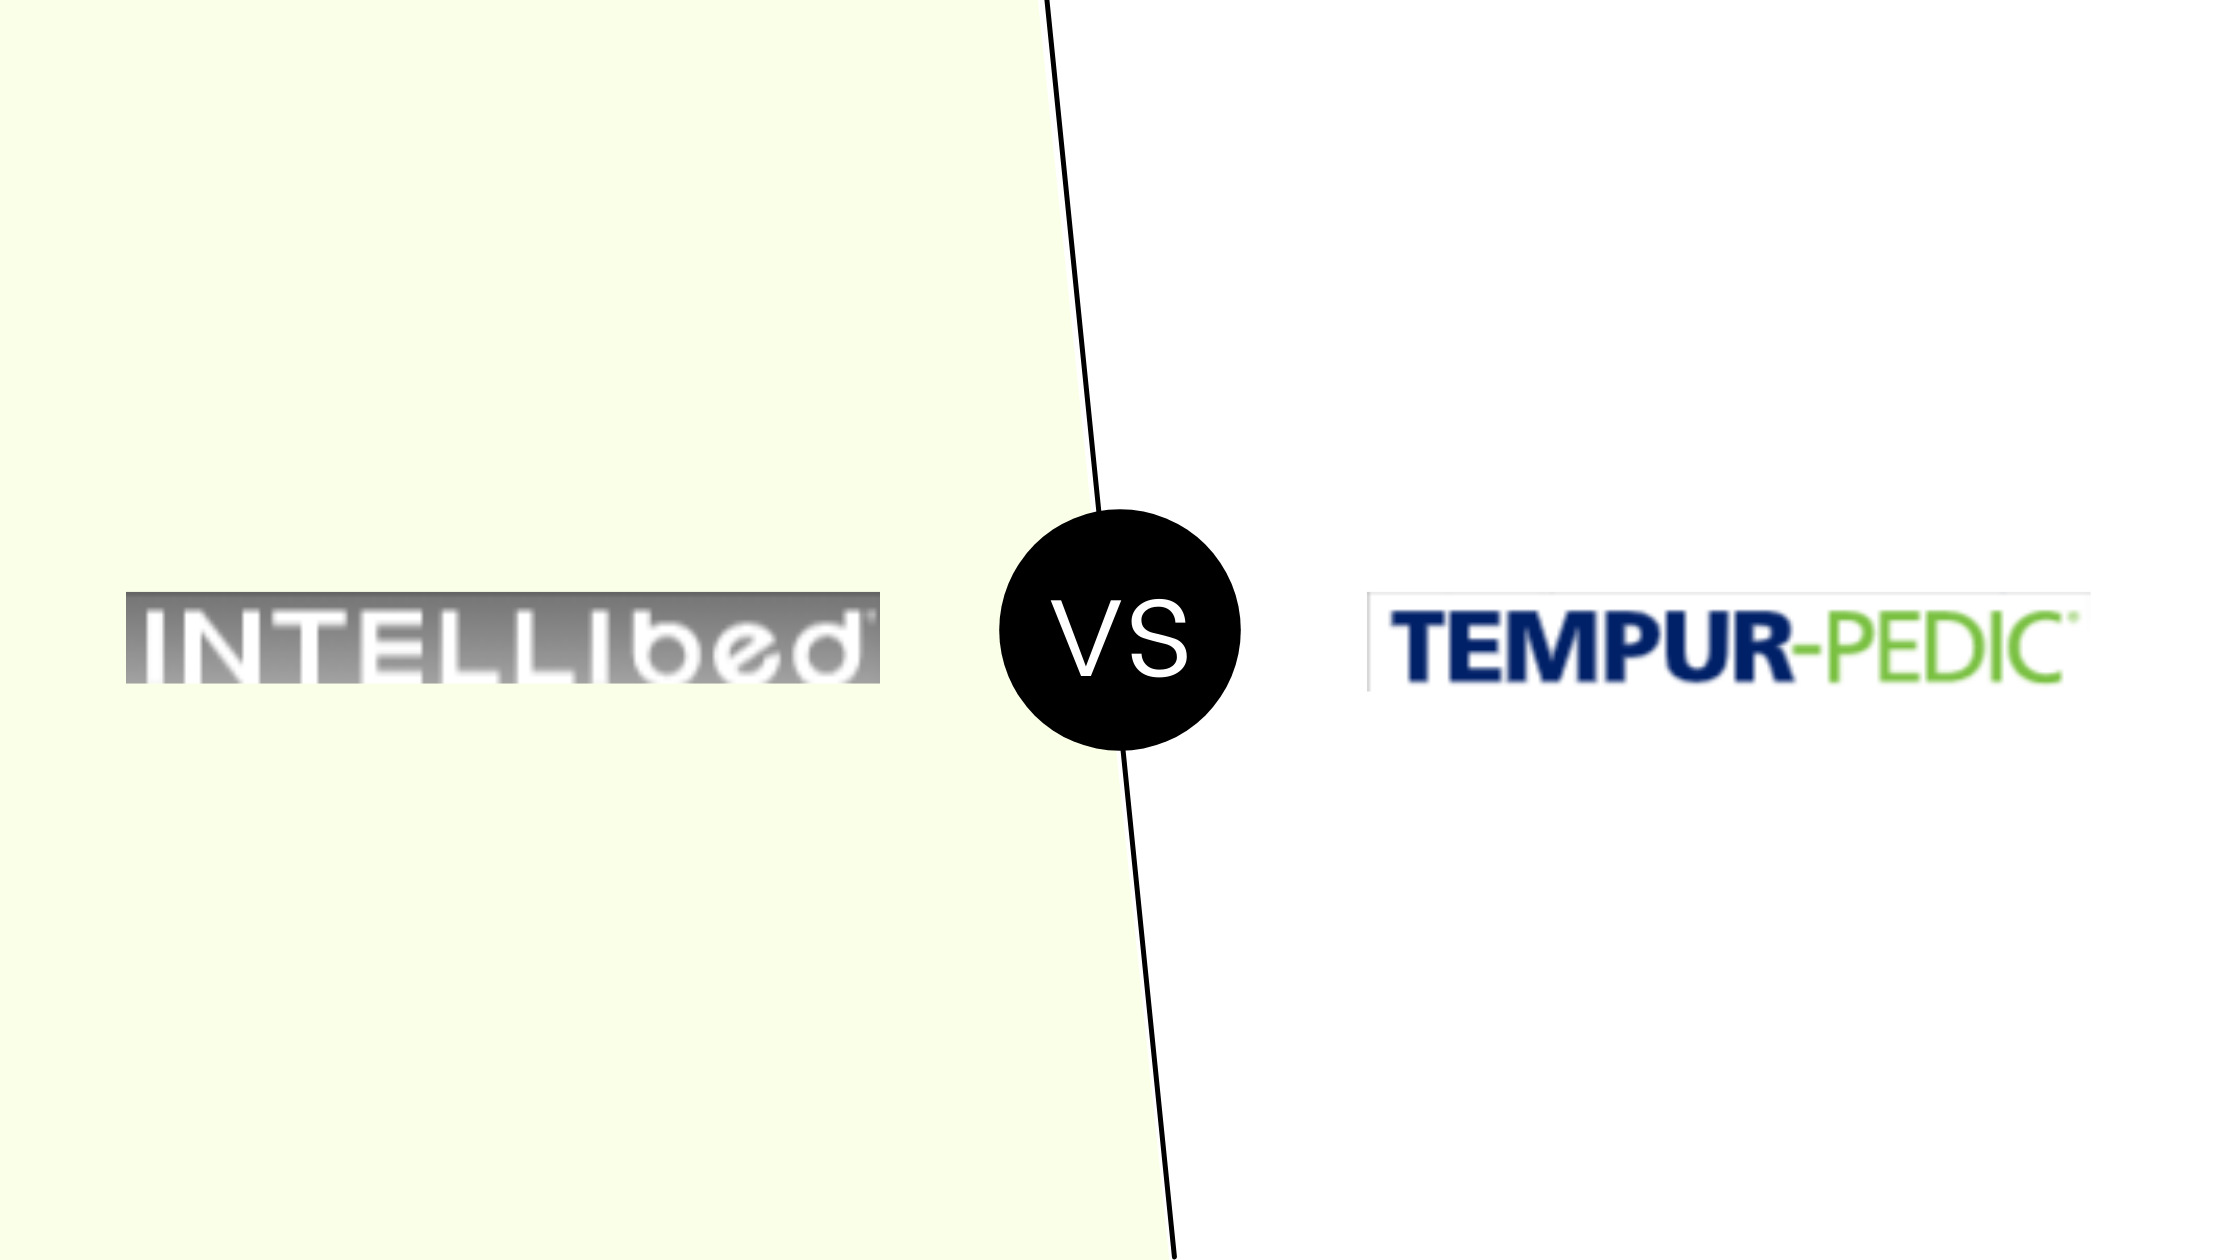 Intellibed vs Tempauredic